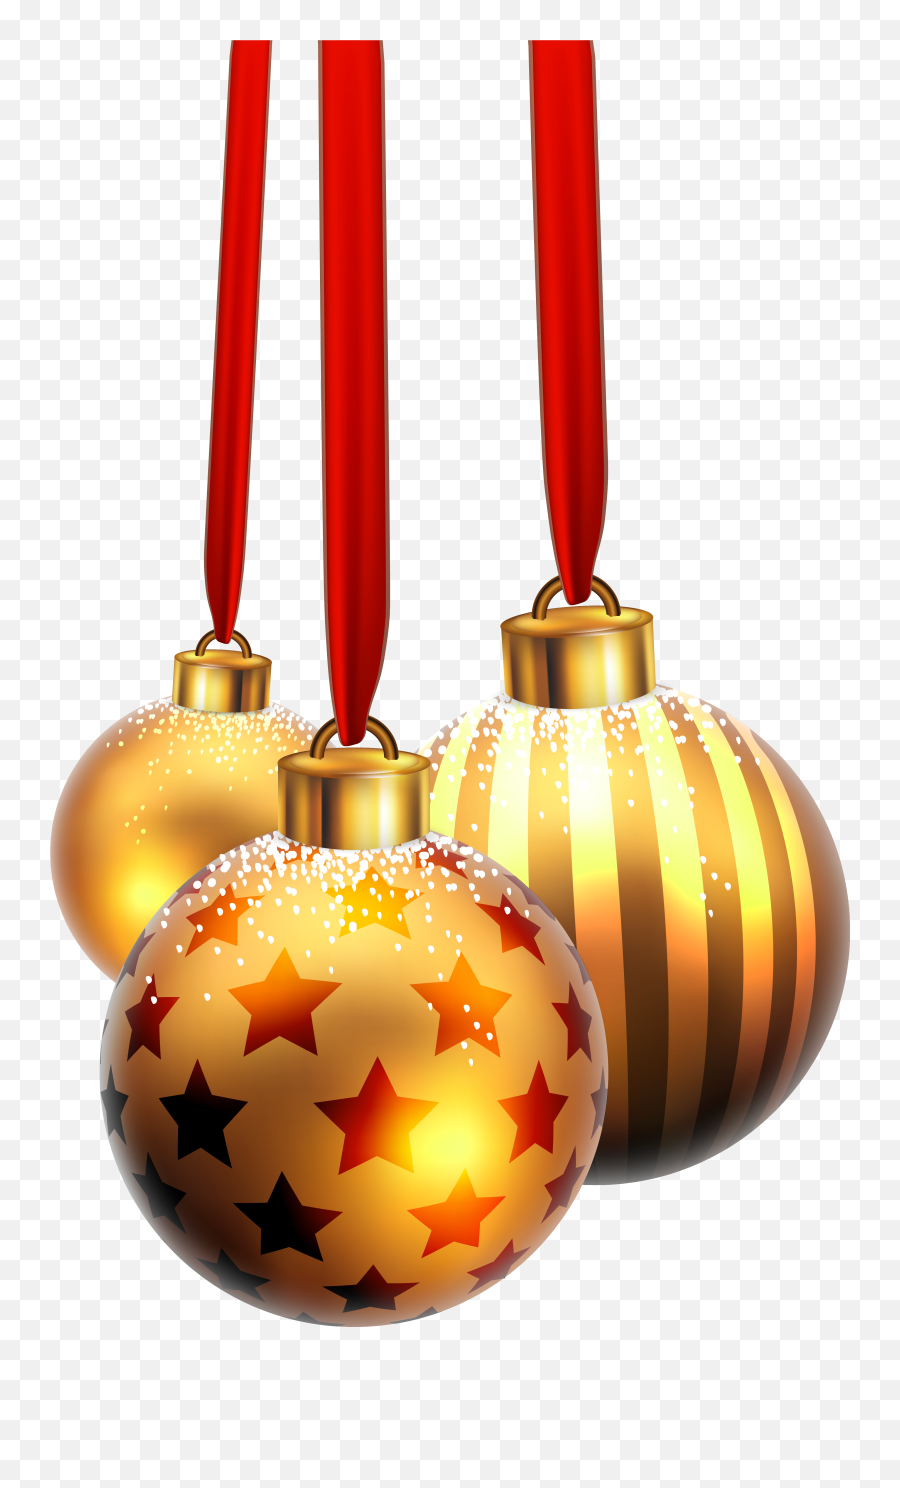 Download Free Png Christmas Balls With - Christmas Snow Balls Png ...